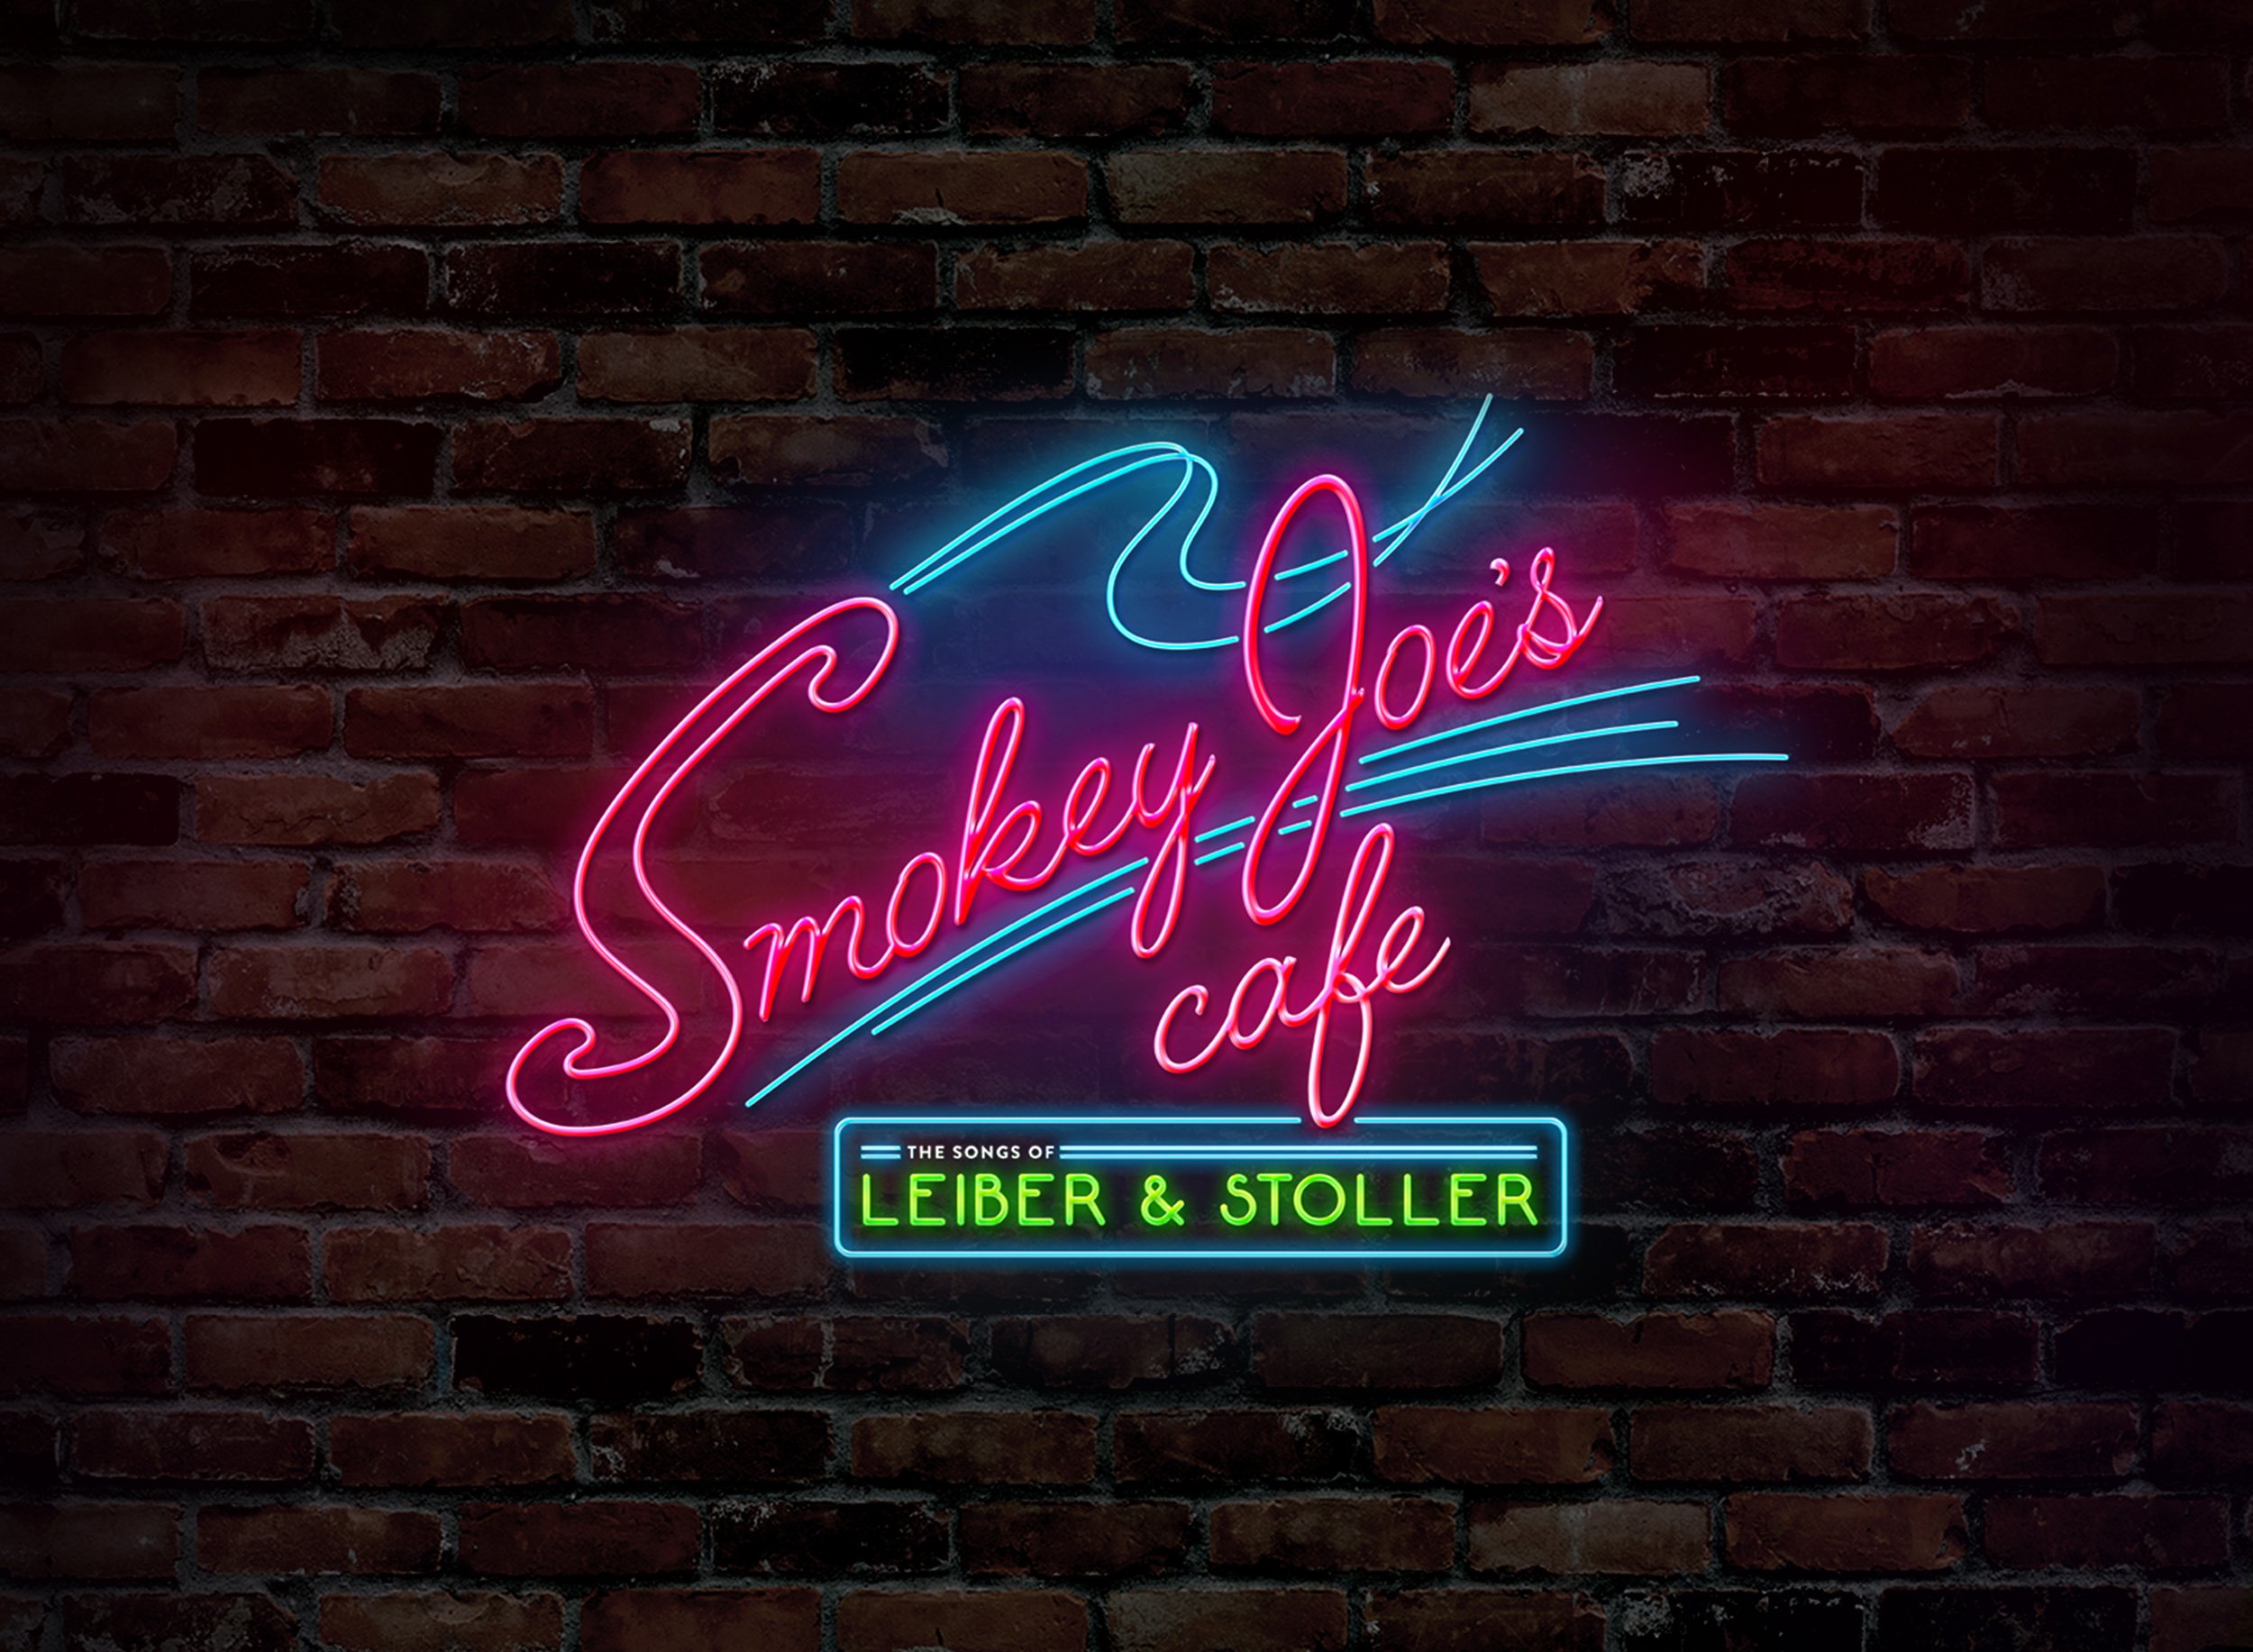 2018_Smokey-Joes-Cafe_01.jpg